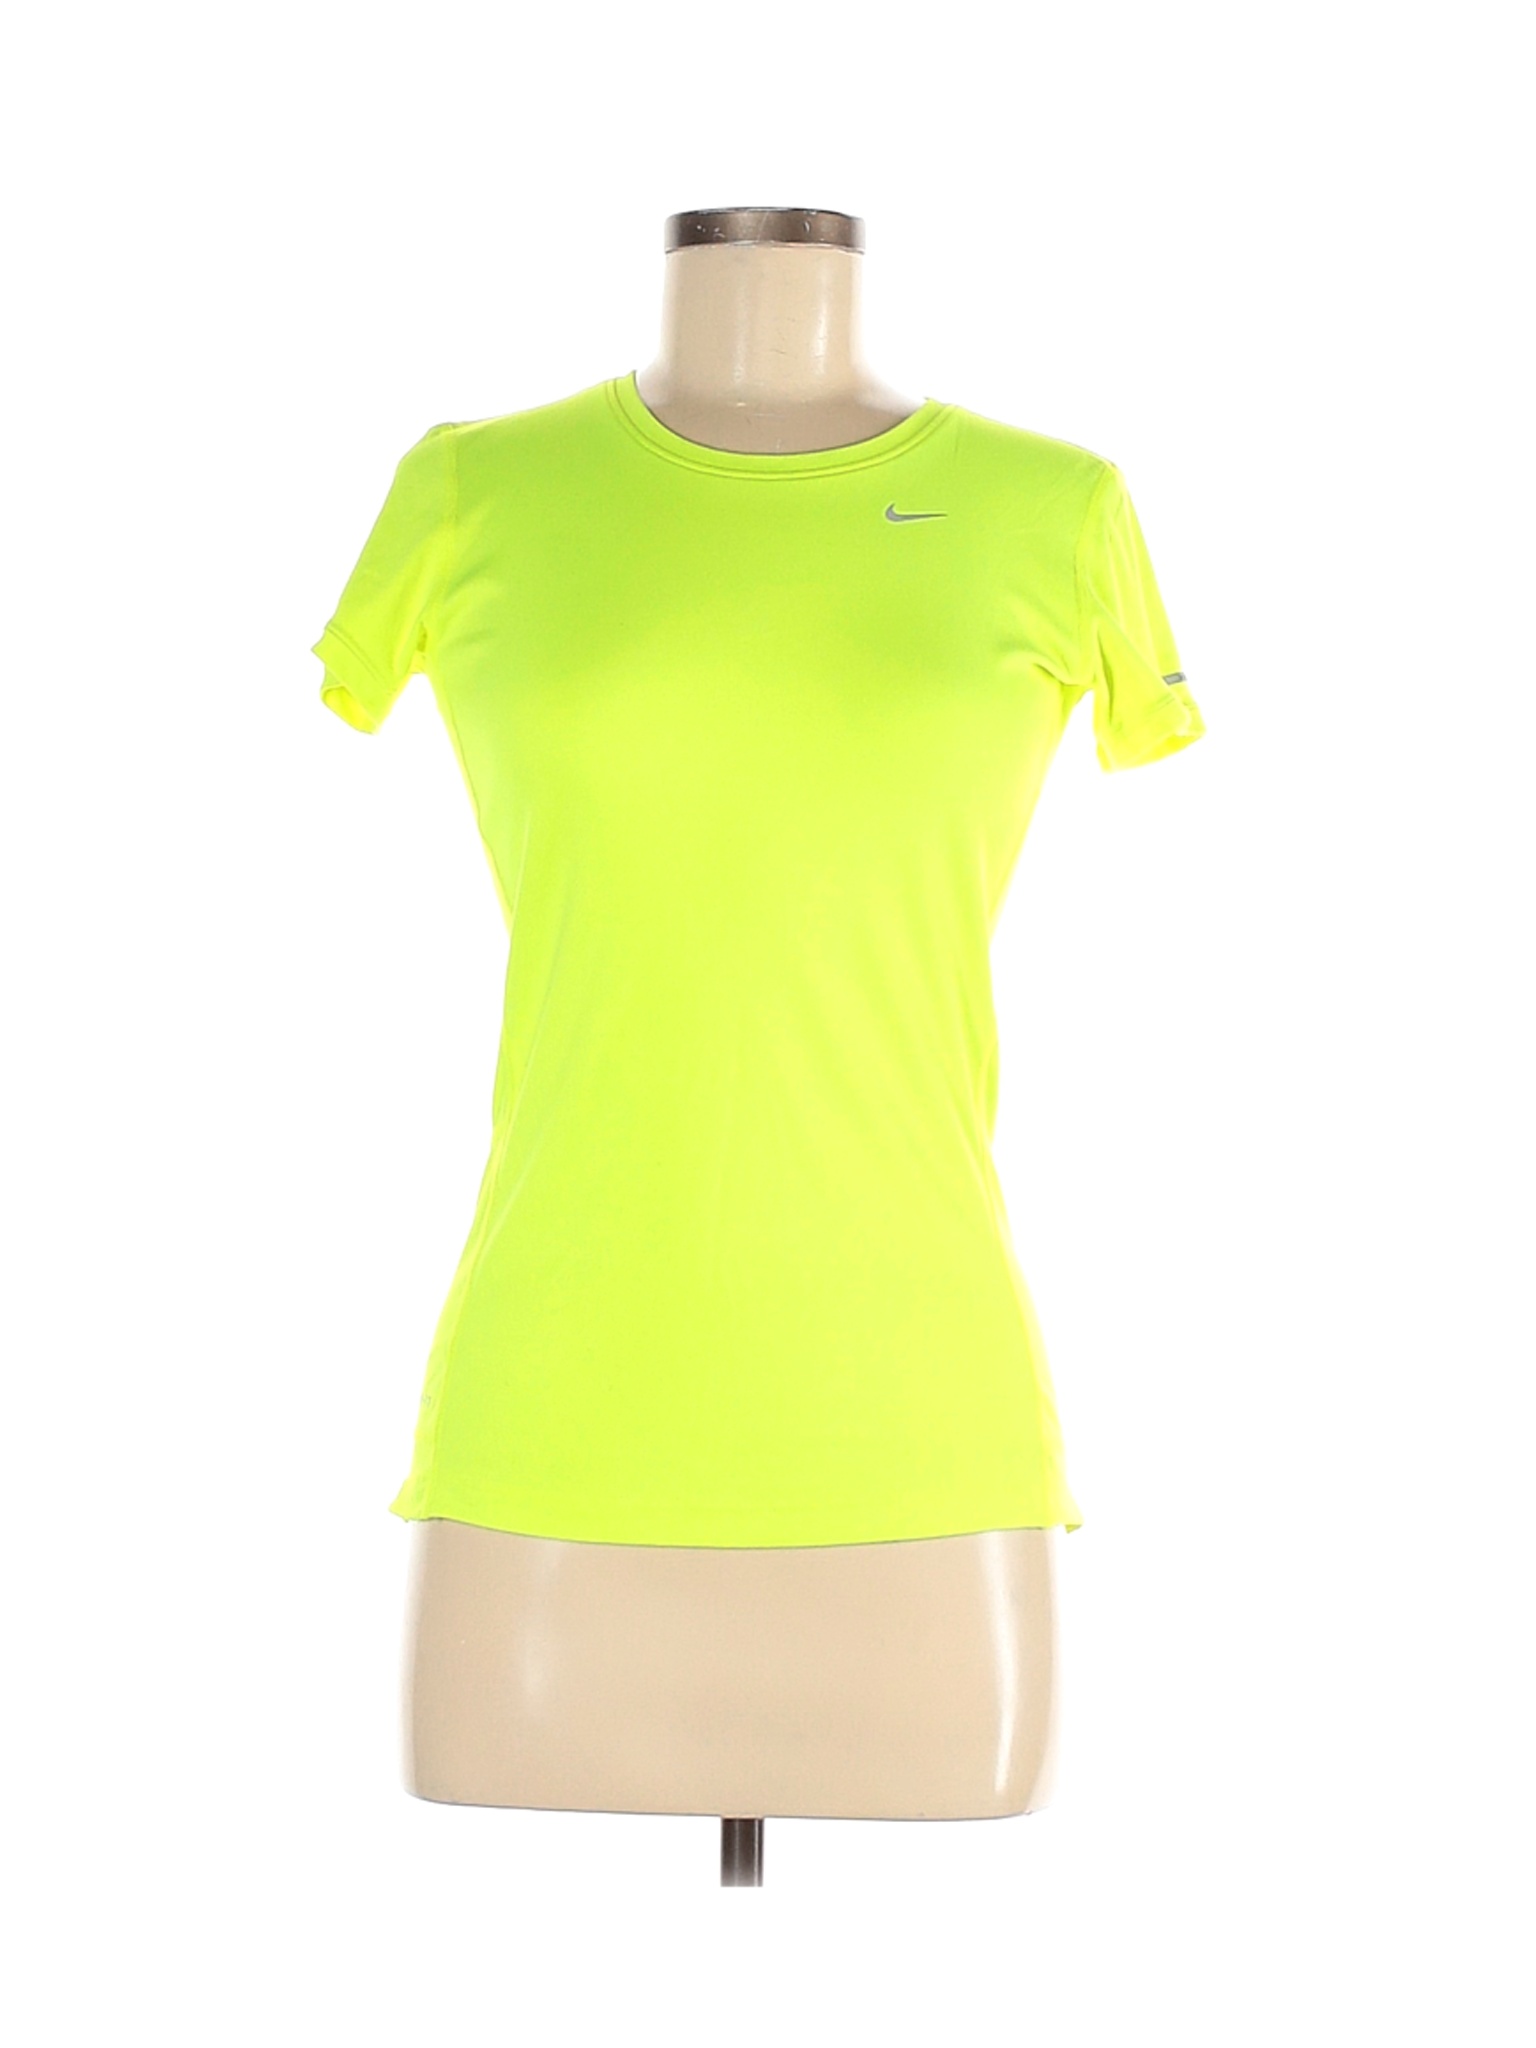 Nike Women Yellow Active T-Shirt XS | eBay